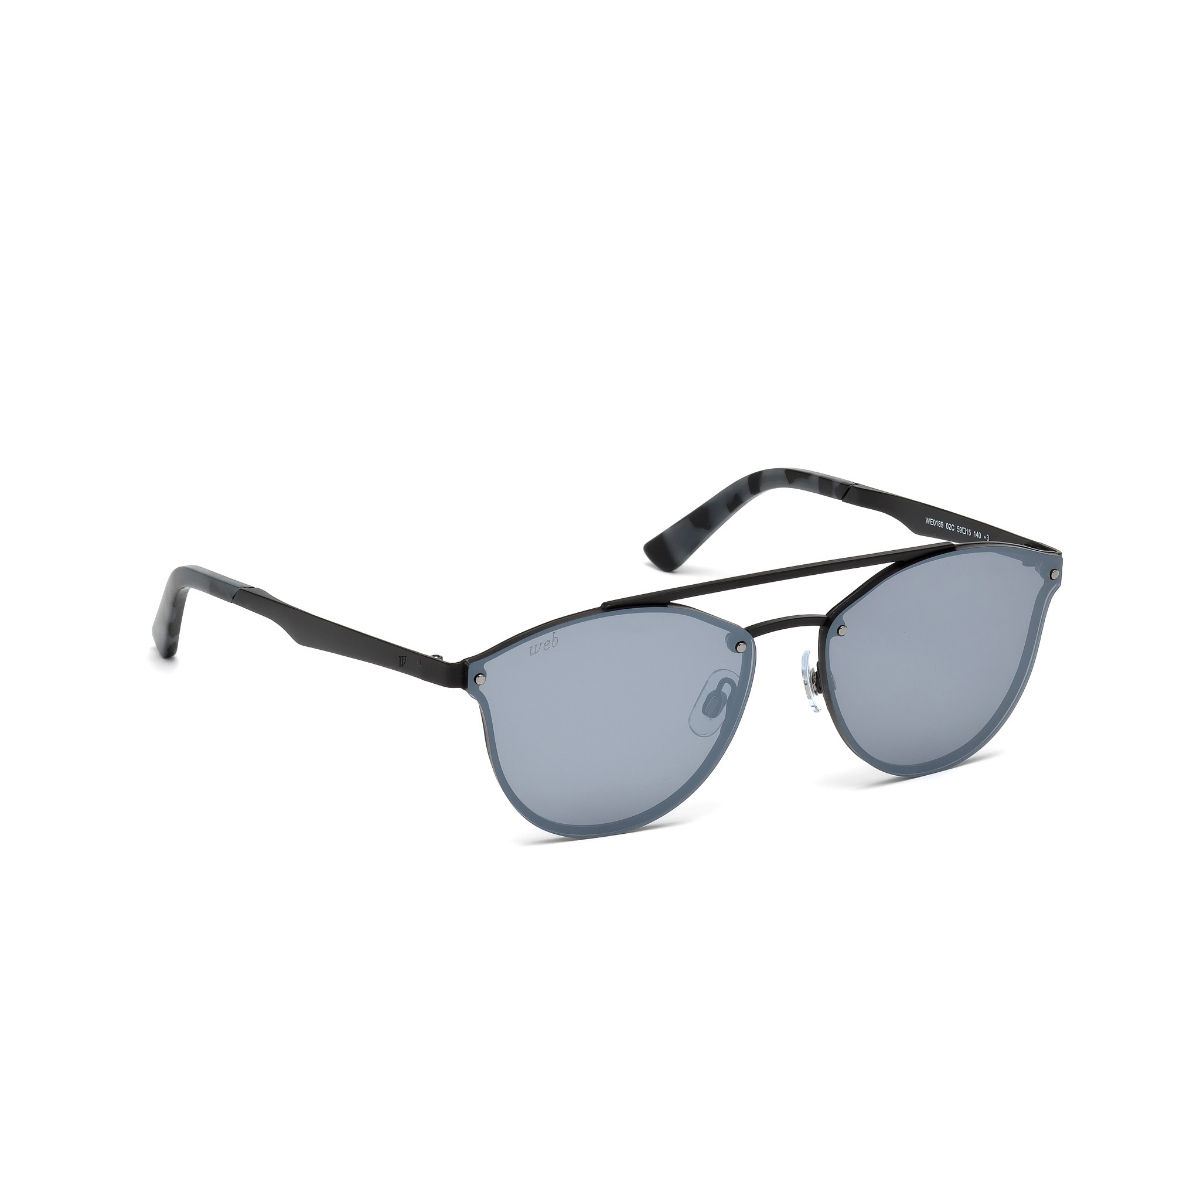 Web Eyewear Blue Metal Unisex Sunglasses WE0189 59 02C: Buy Web Eyewear ...